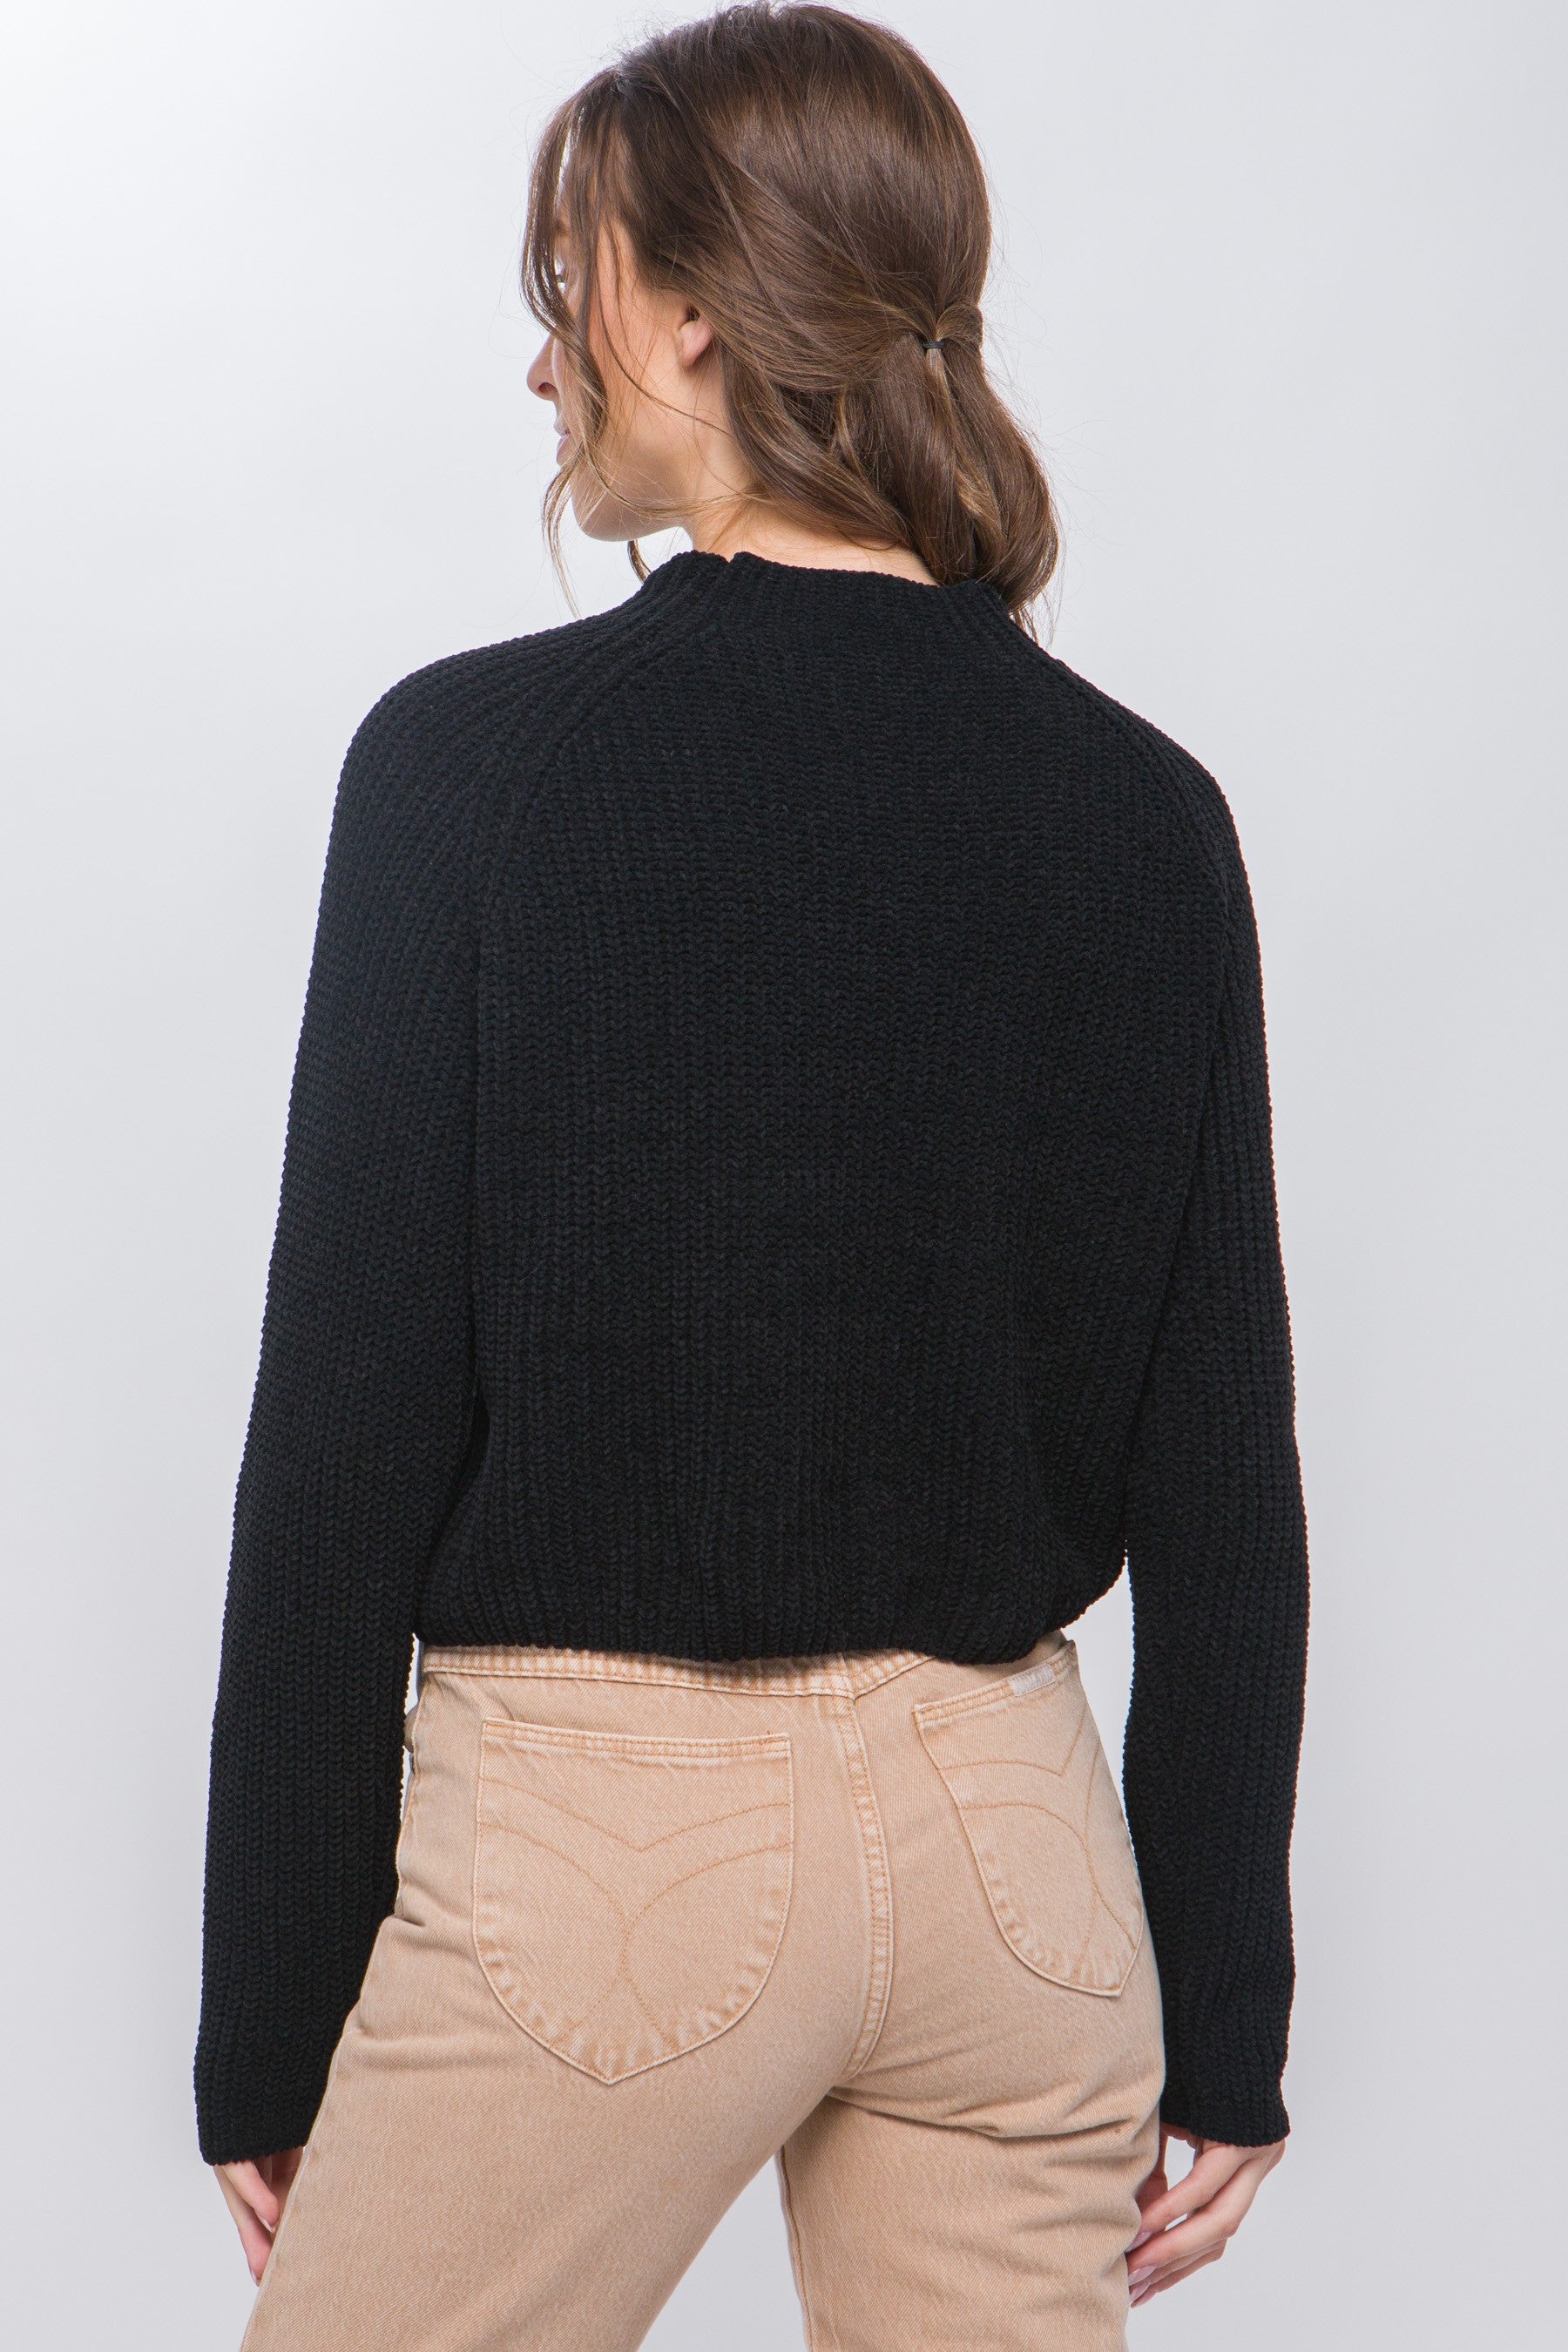 Carly Knit Sweater